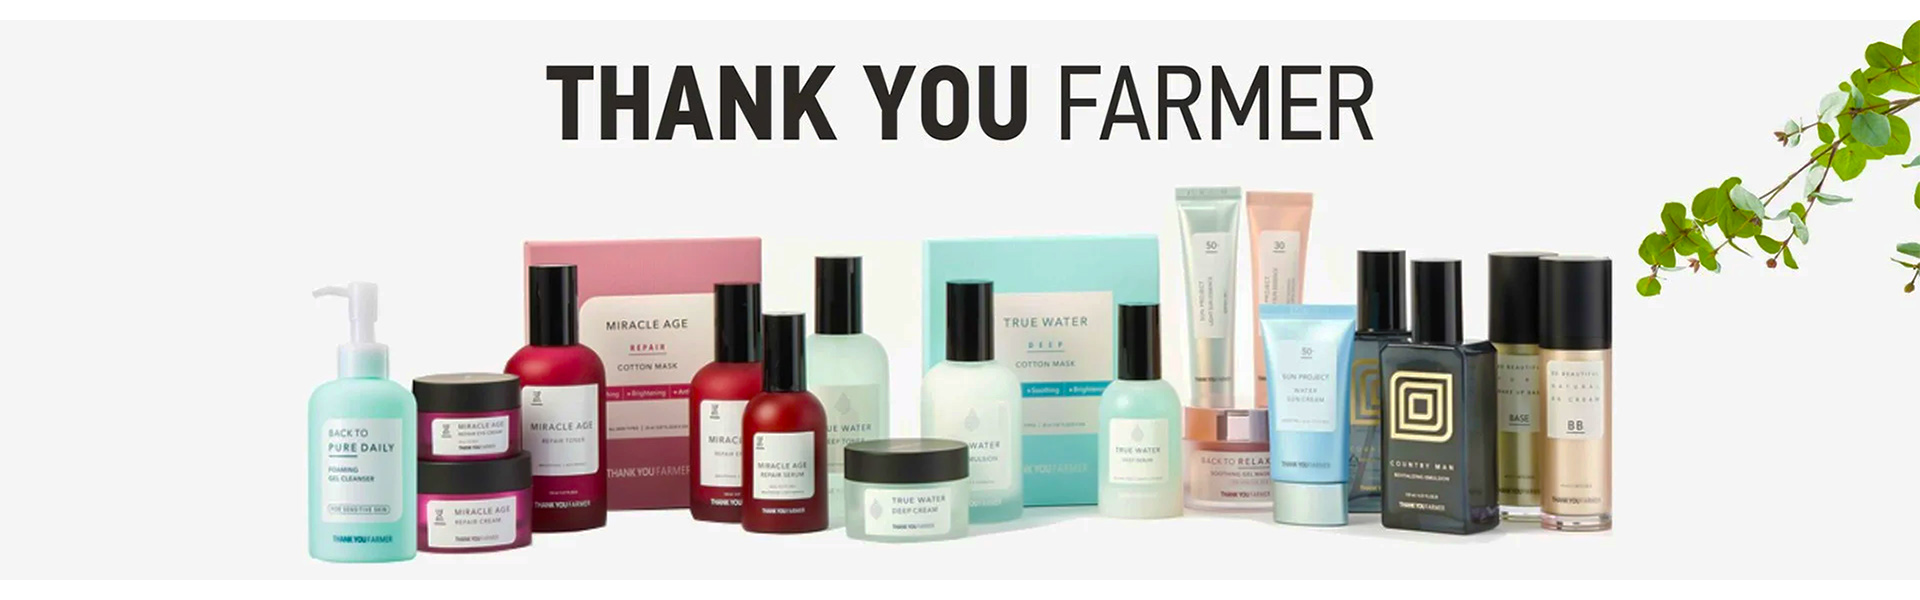 thank_you_farmer_banner.jpg